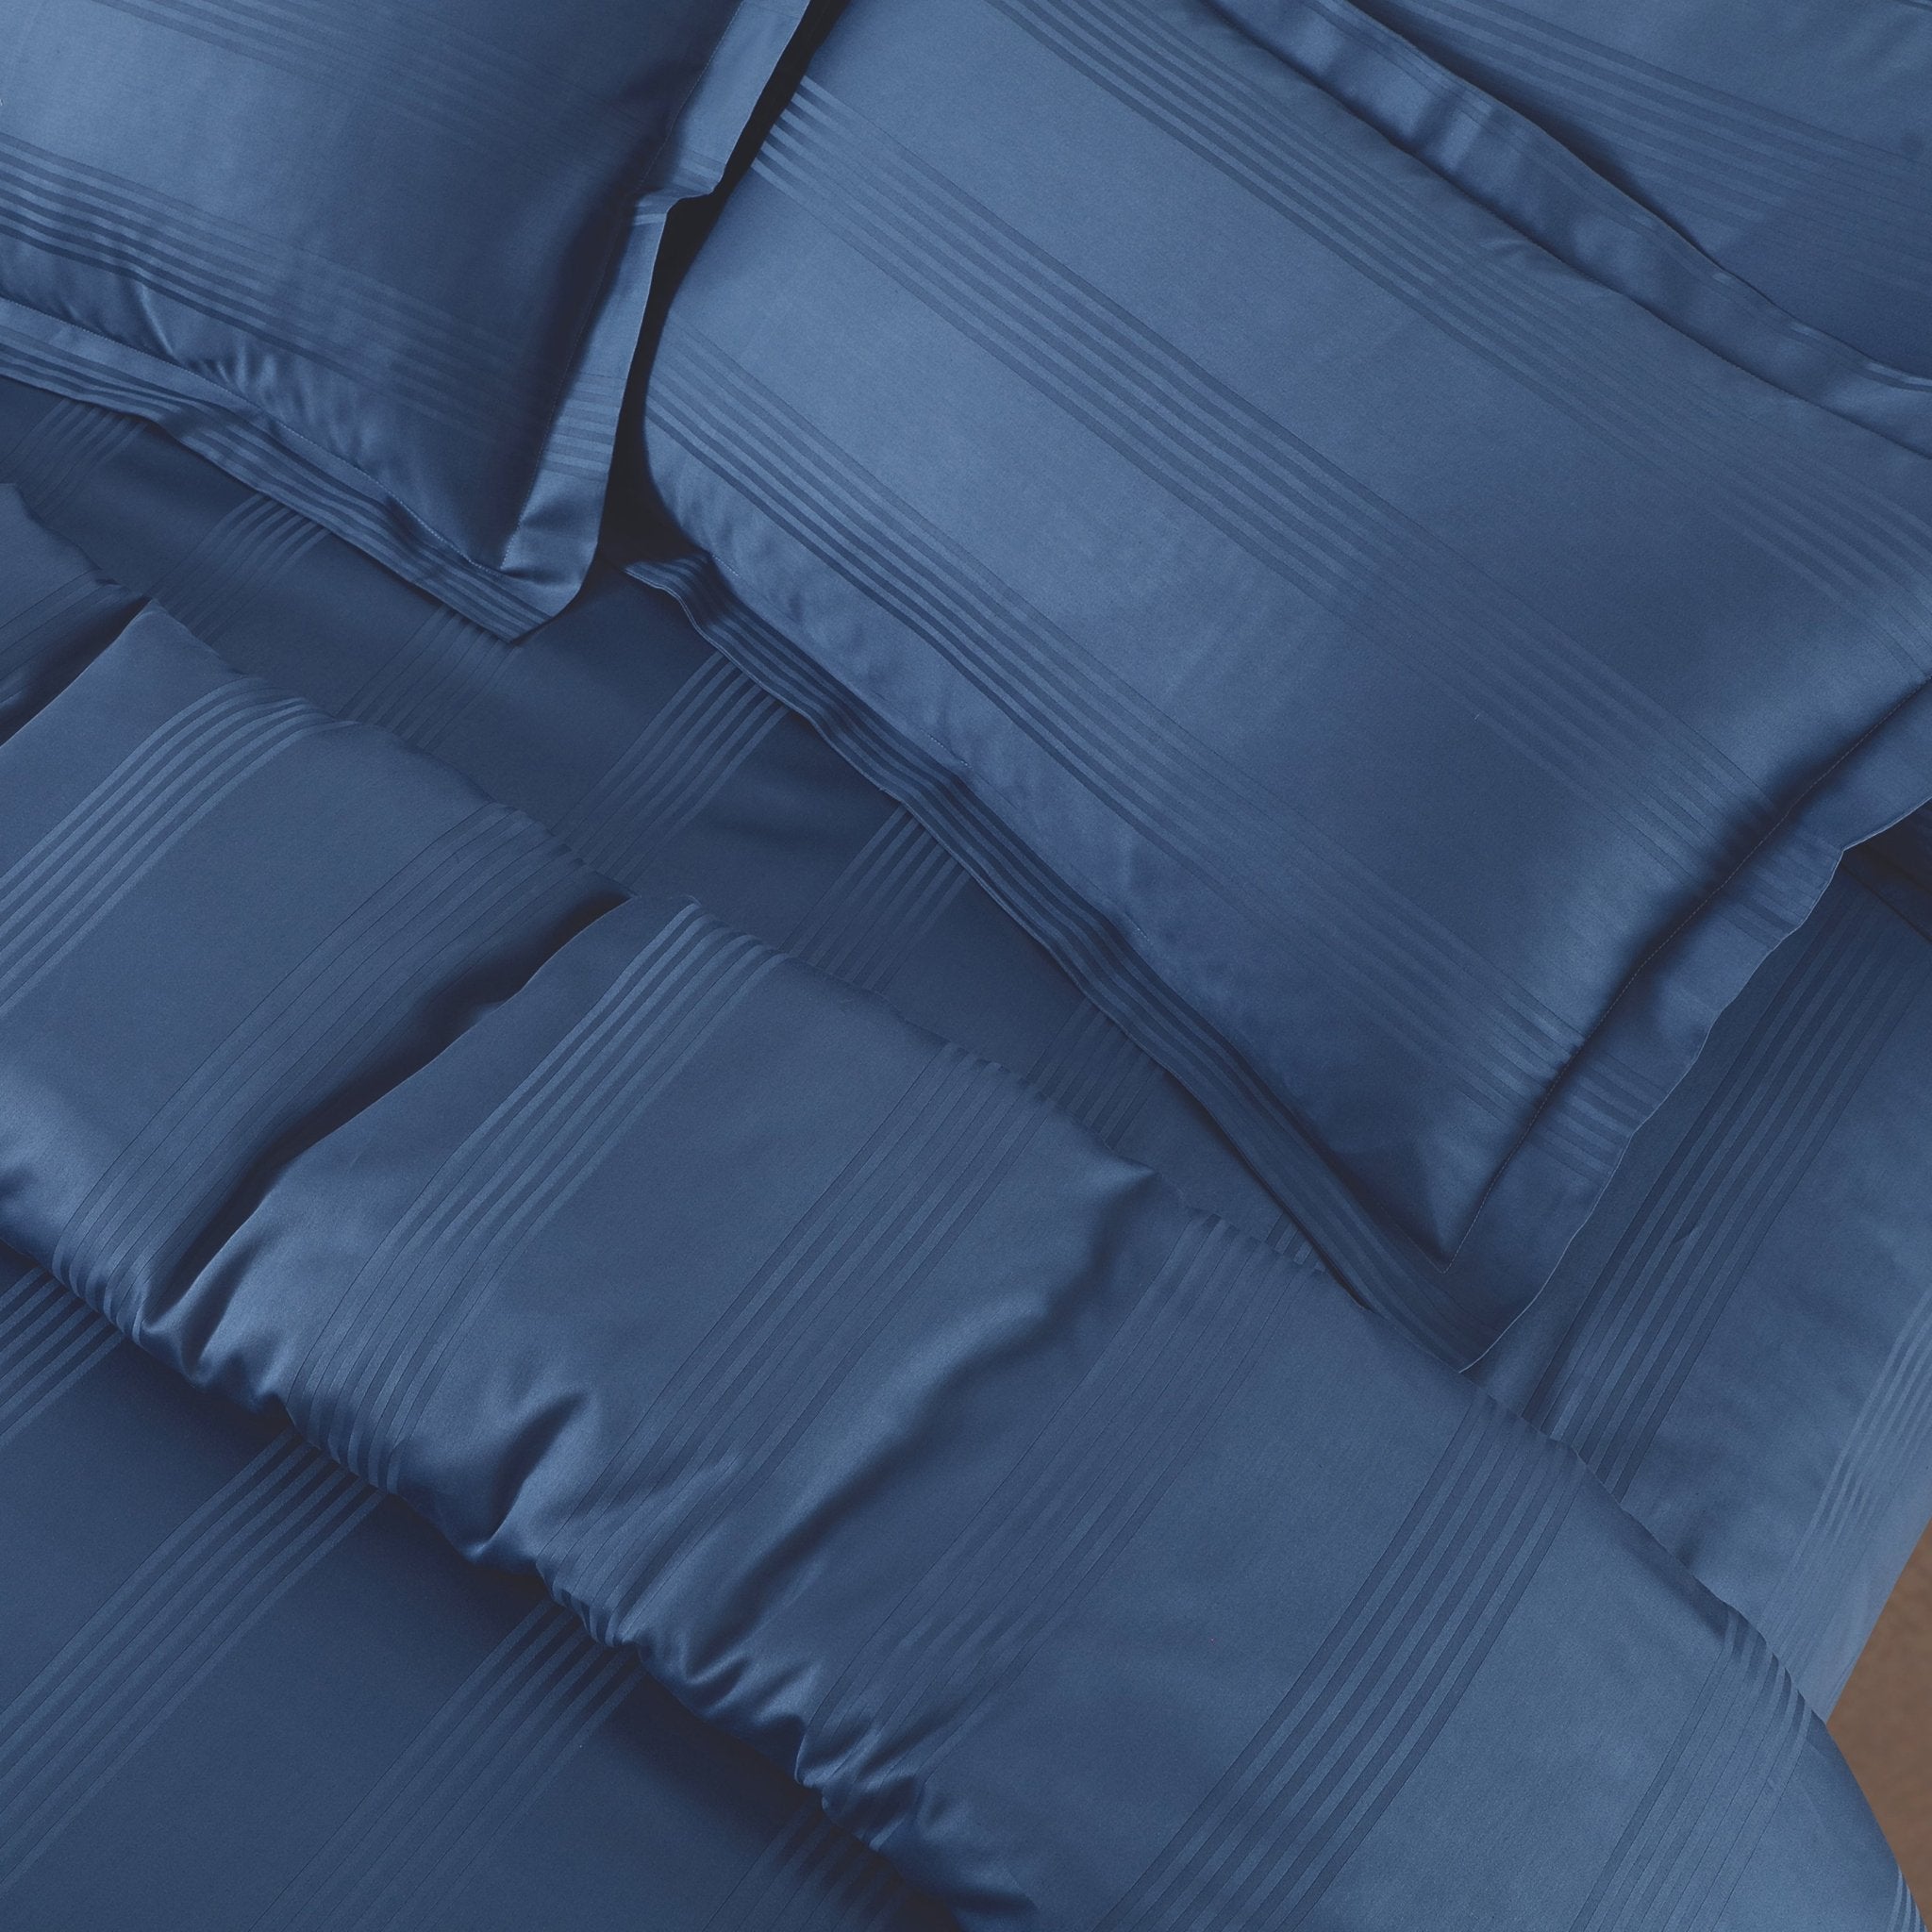 Malako Turin Jacquard Blue Stripes 500TC 100% Cotton King Size 6 Piece Comforter Set - MALAKO